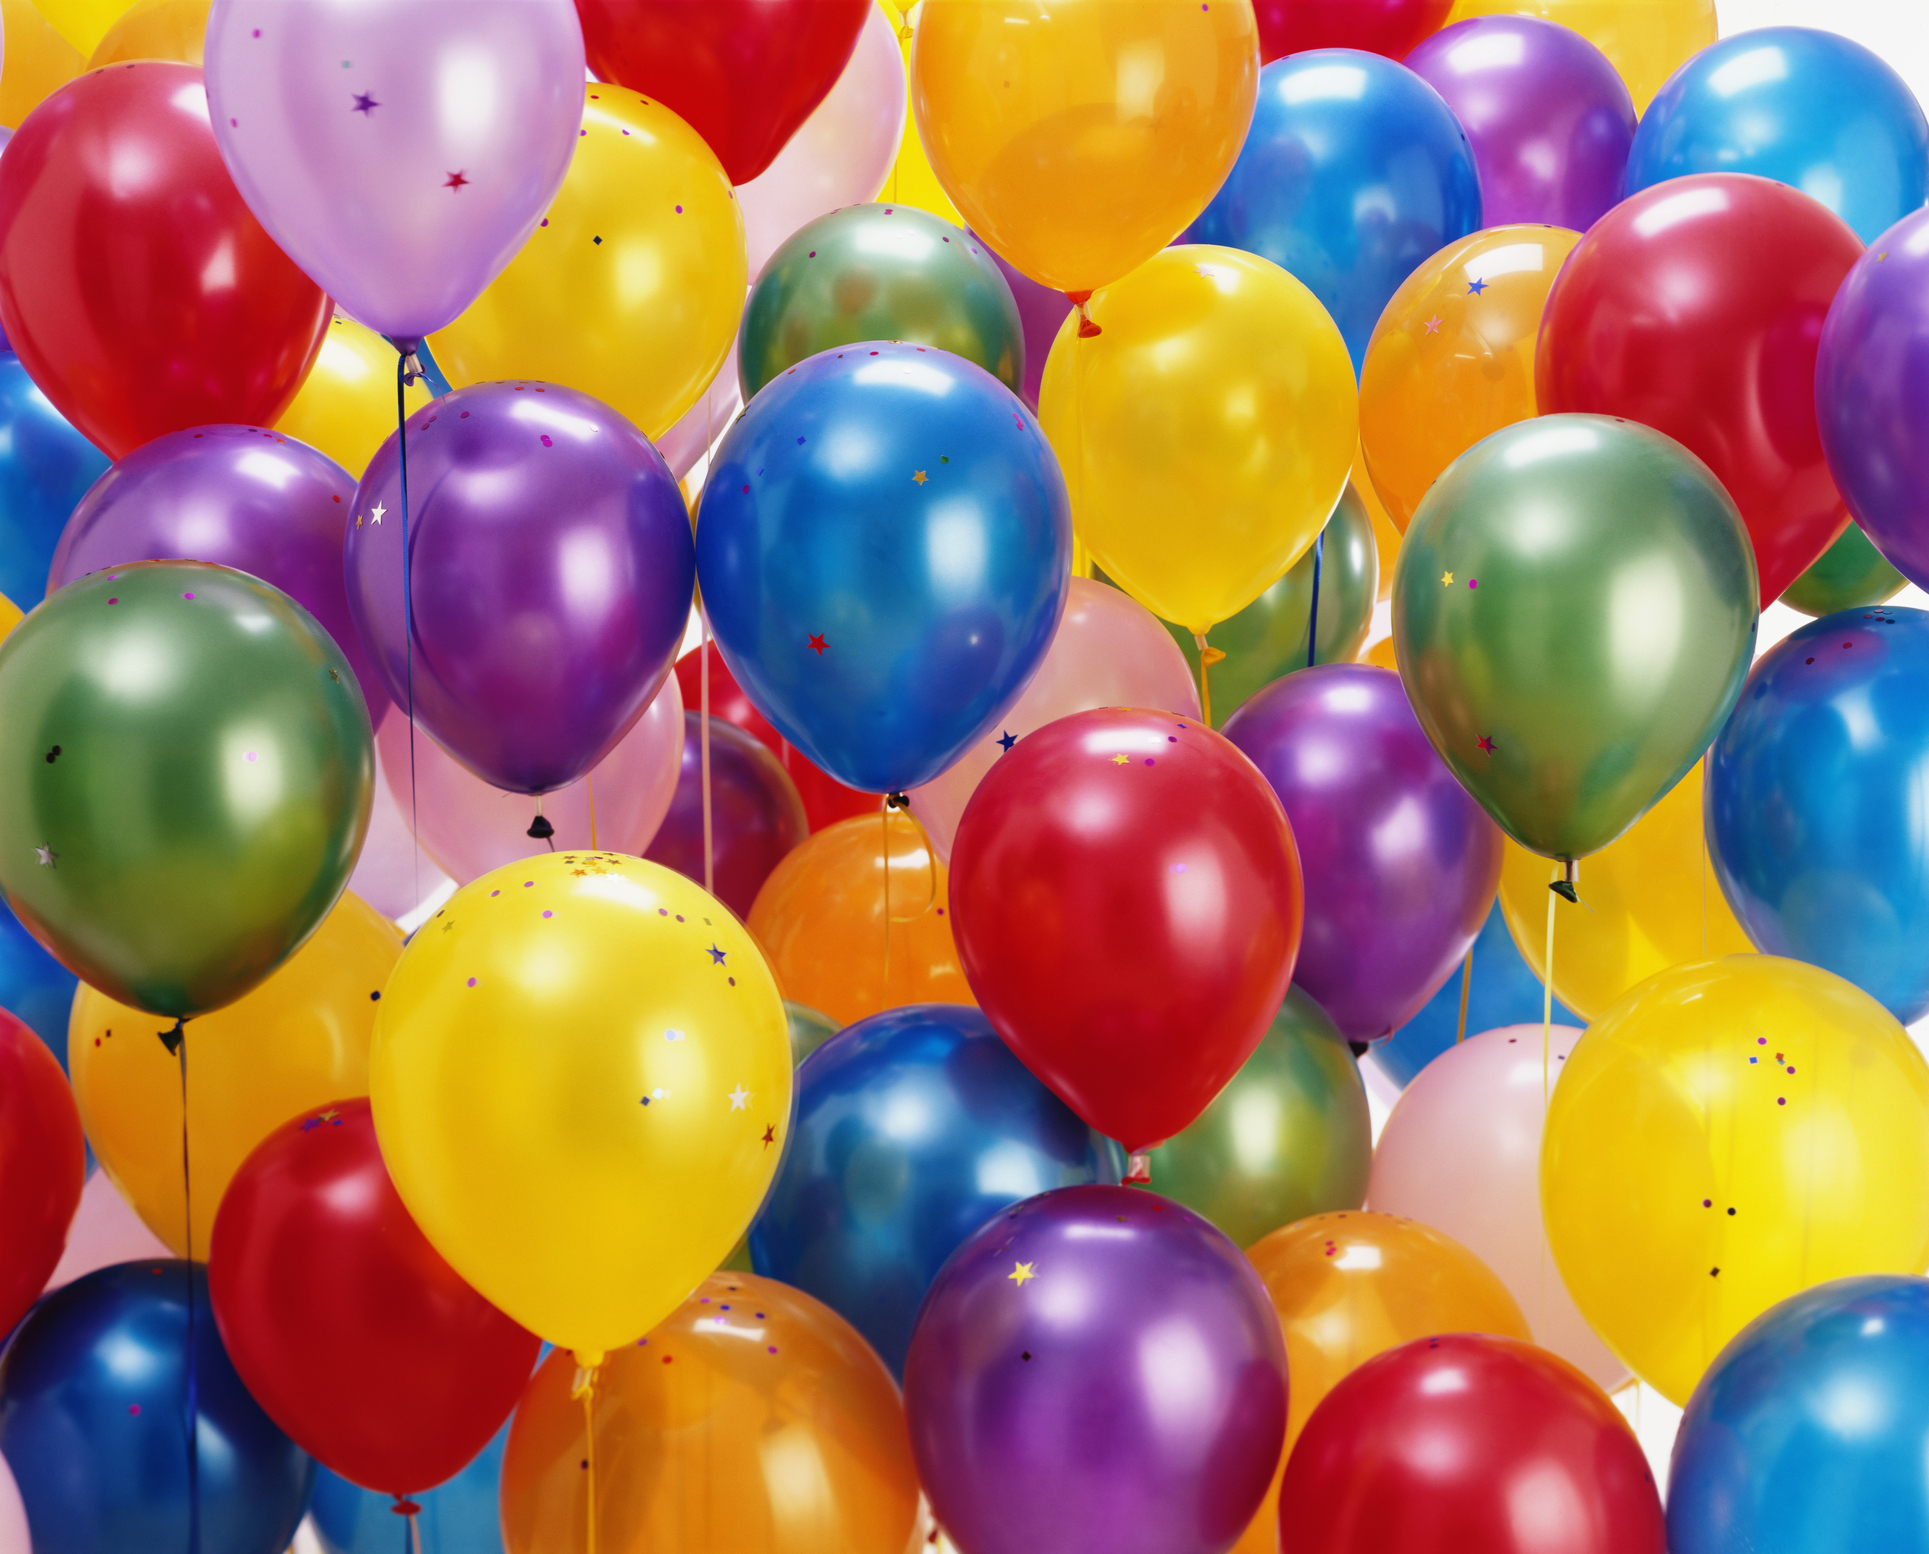 southampton-town-bans-helium-balloon-sales